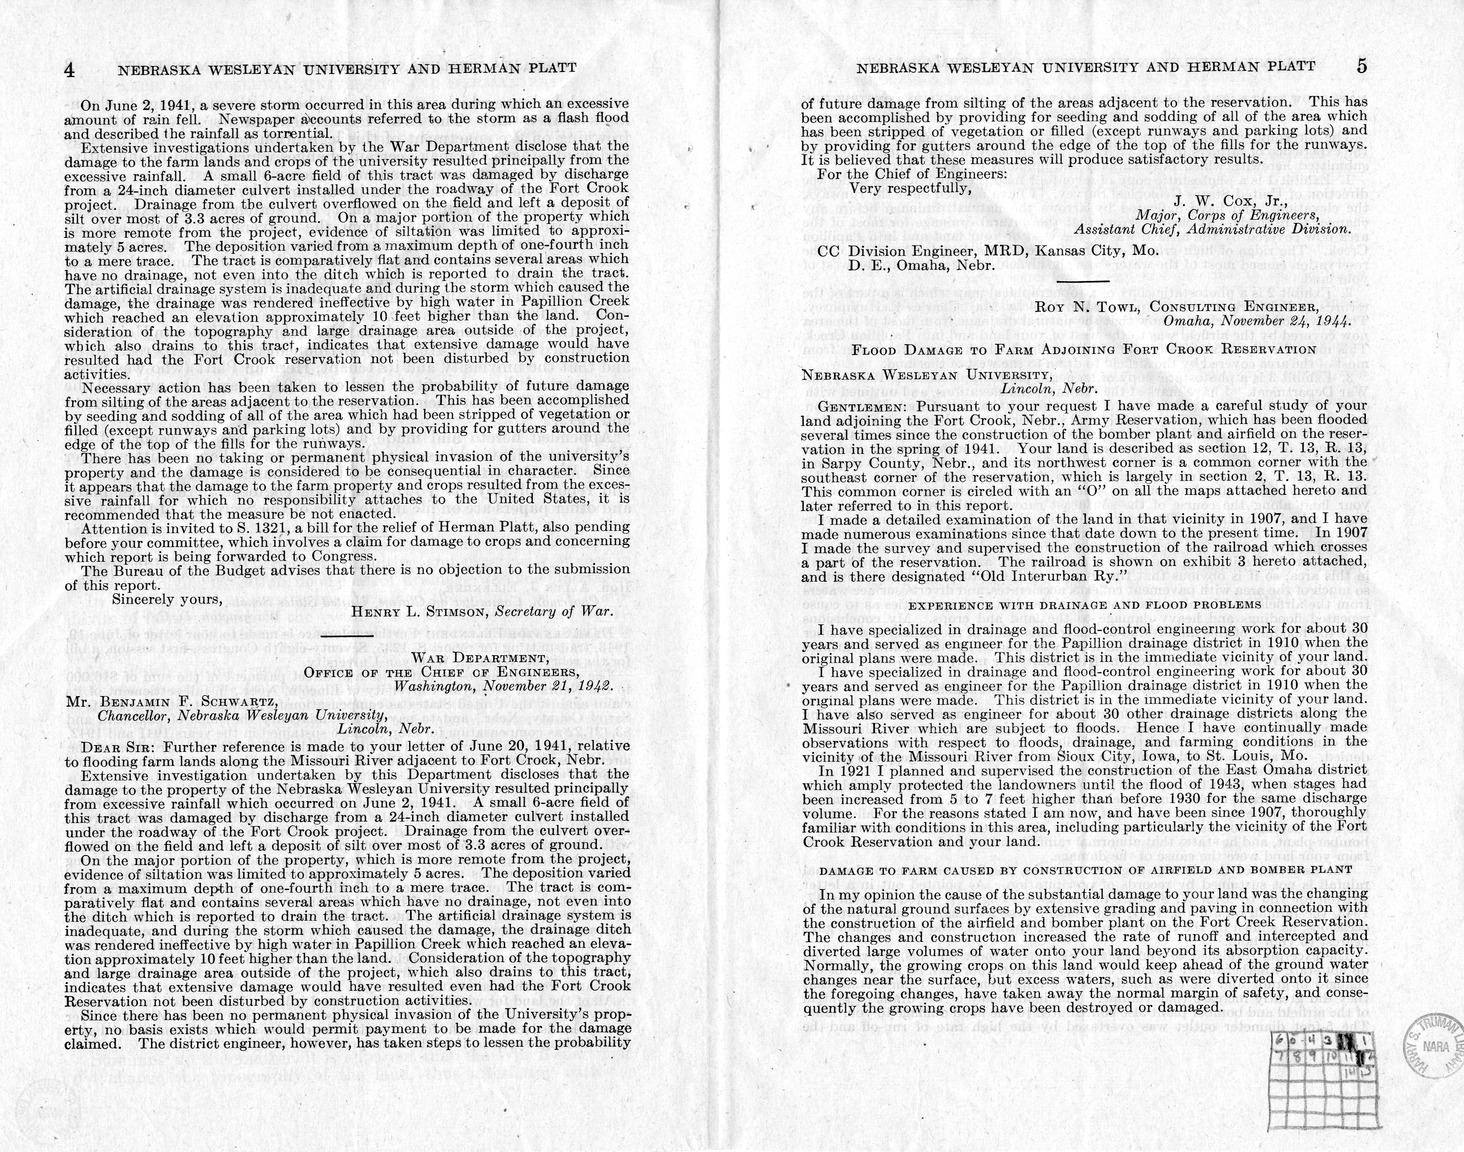 Memorandum from Harold D. Smith to M. C. Latta, S. 392, For the Relief of Nebraska Wesleyan University and Herman Platt, with Attachments